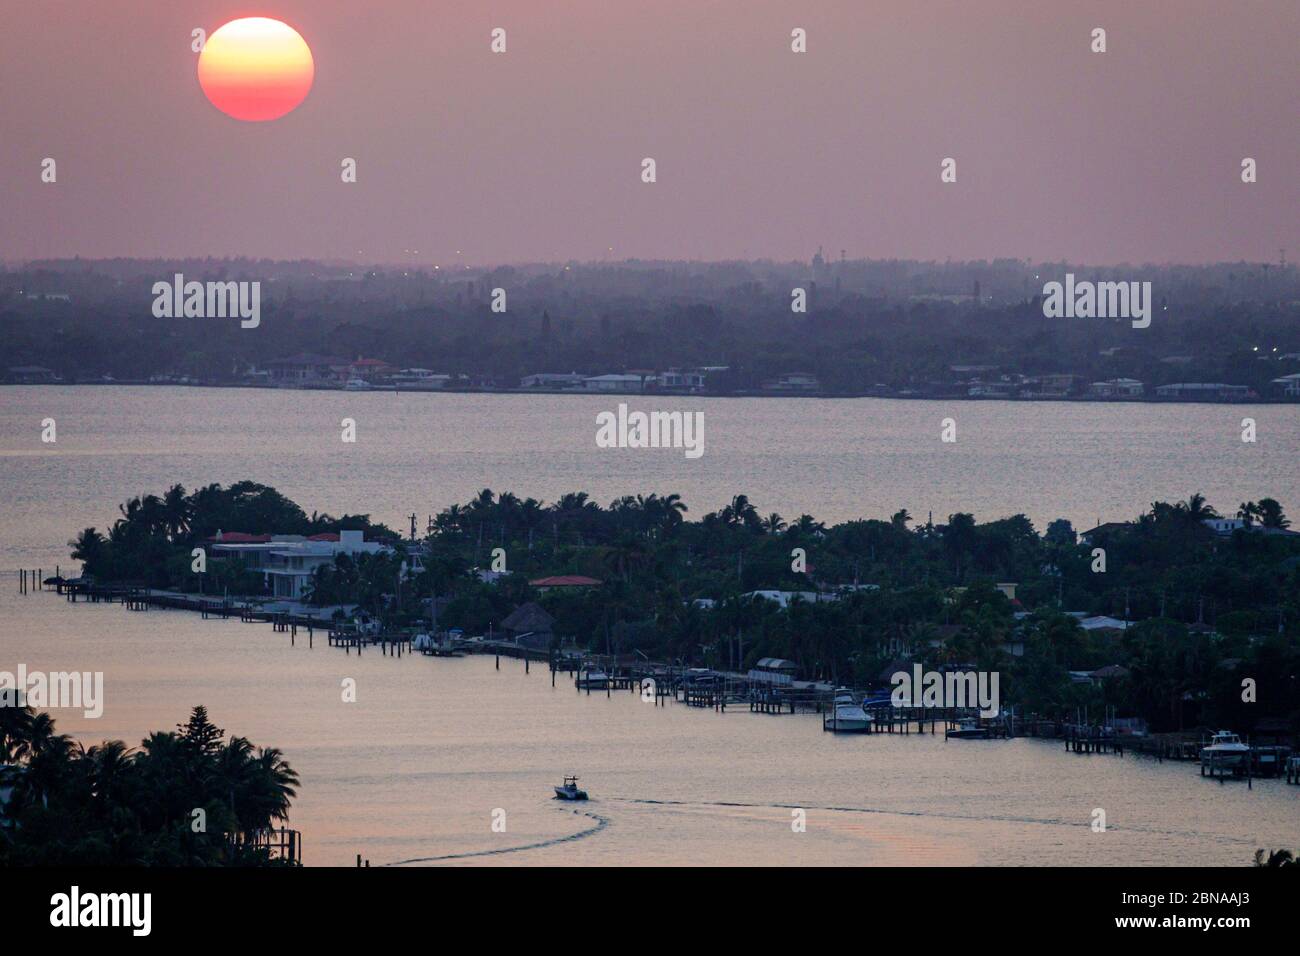 Miami Beach Florida,North Beach,Biscayne Bay,sunset,clouds,hazy,FL200415027 Stock Photo